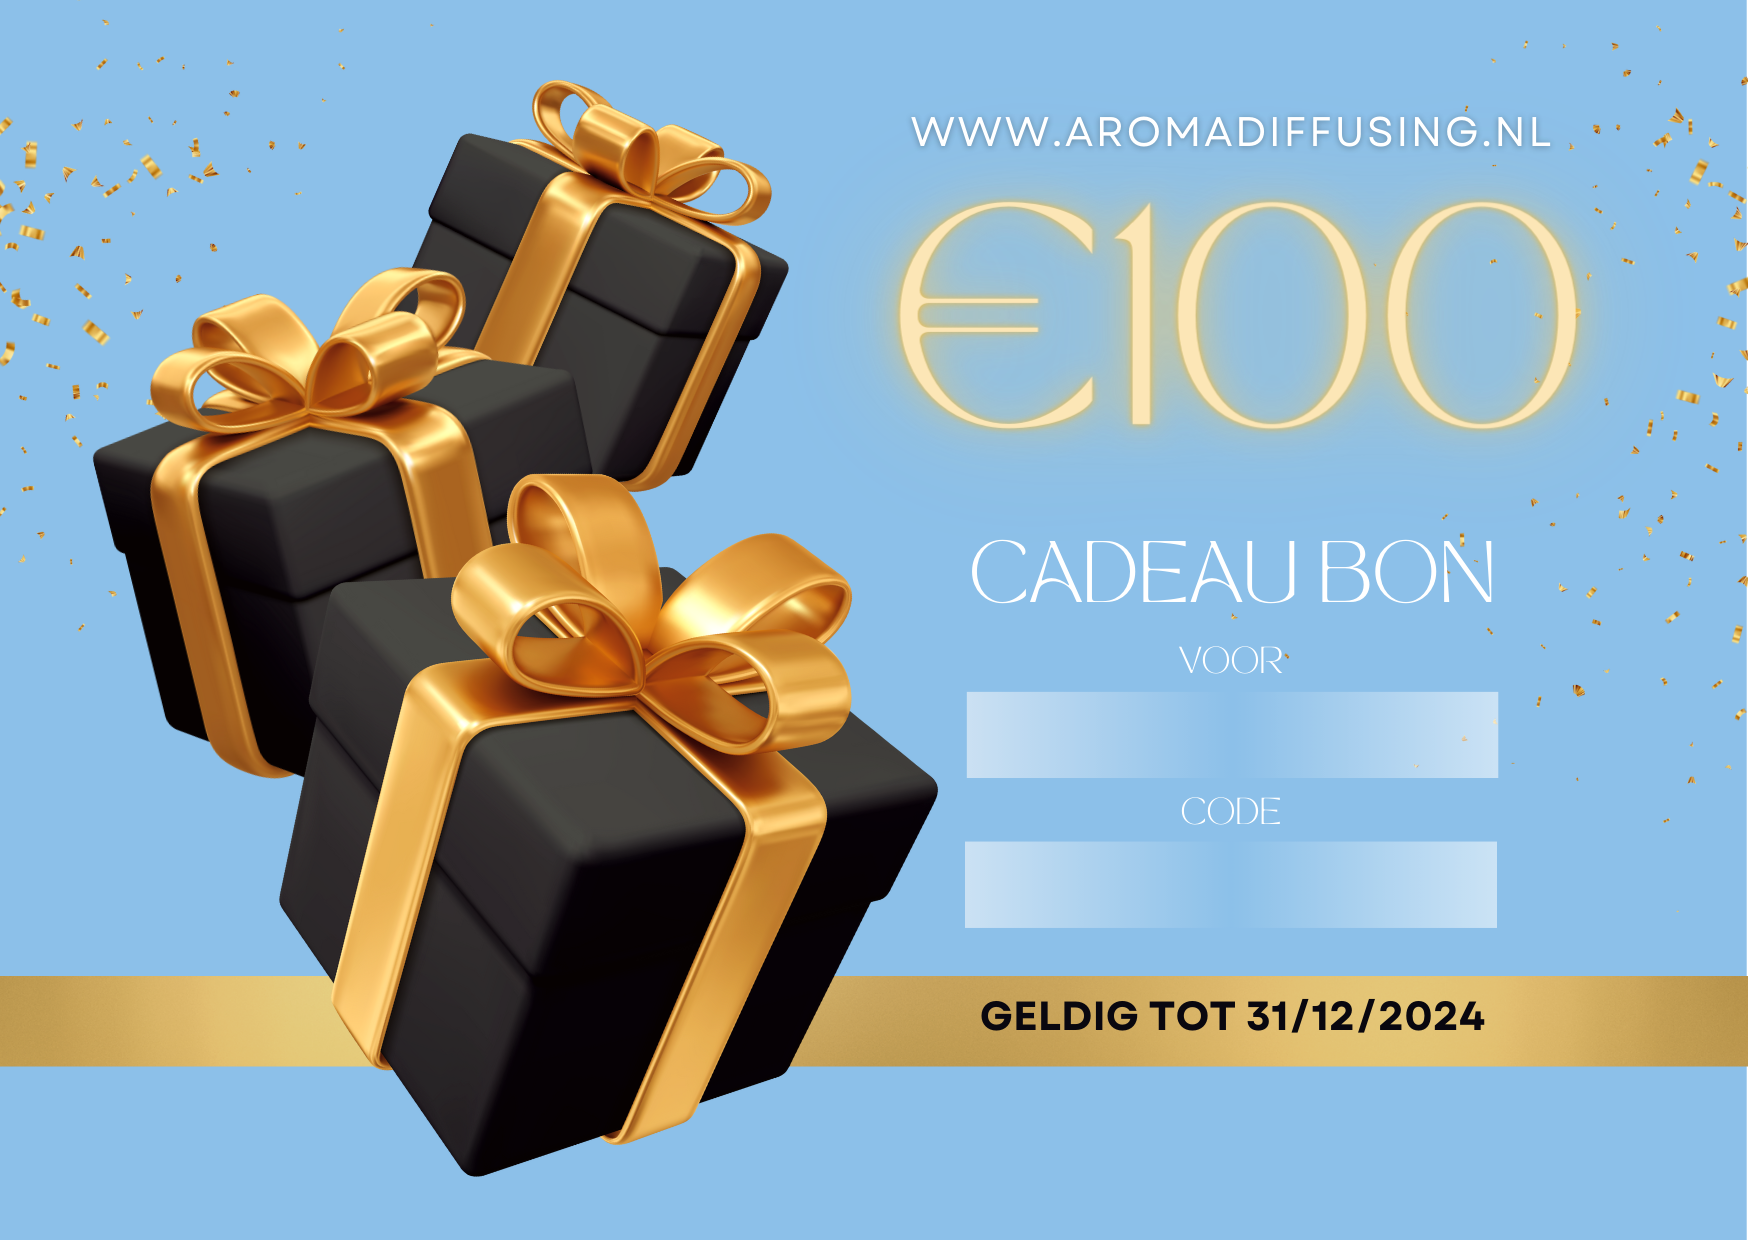 AromaDiffusing Cadeau Bon €100